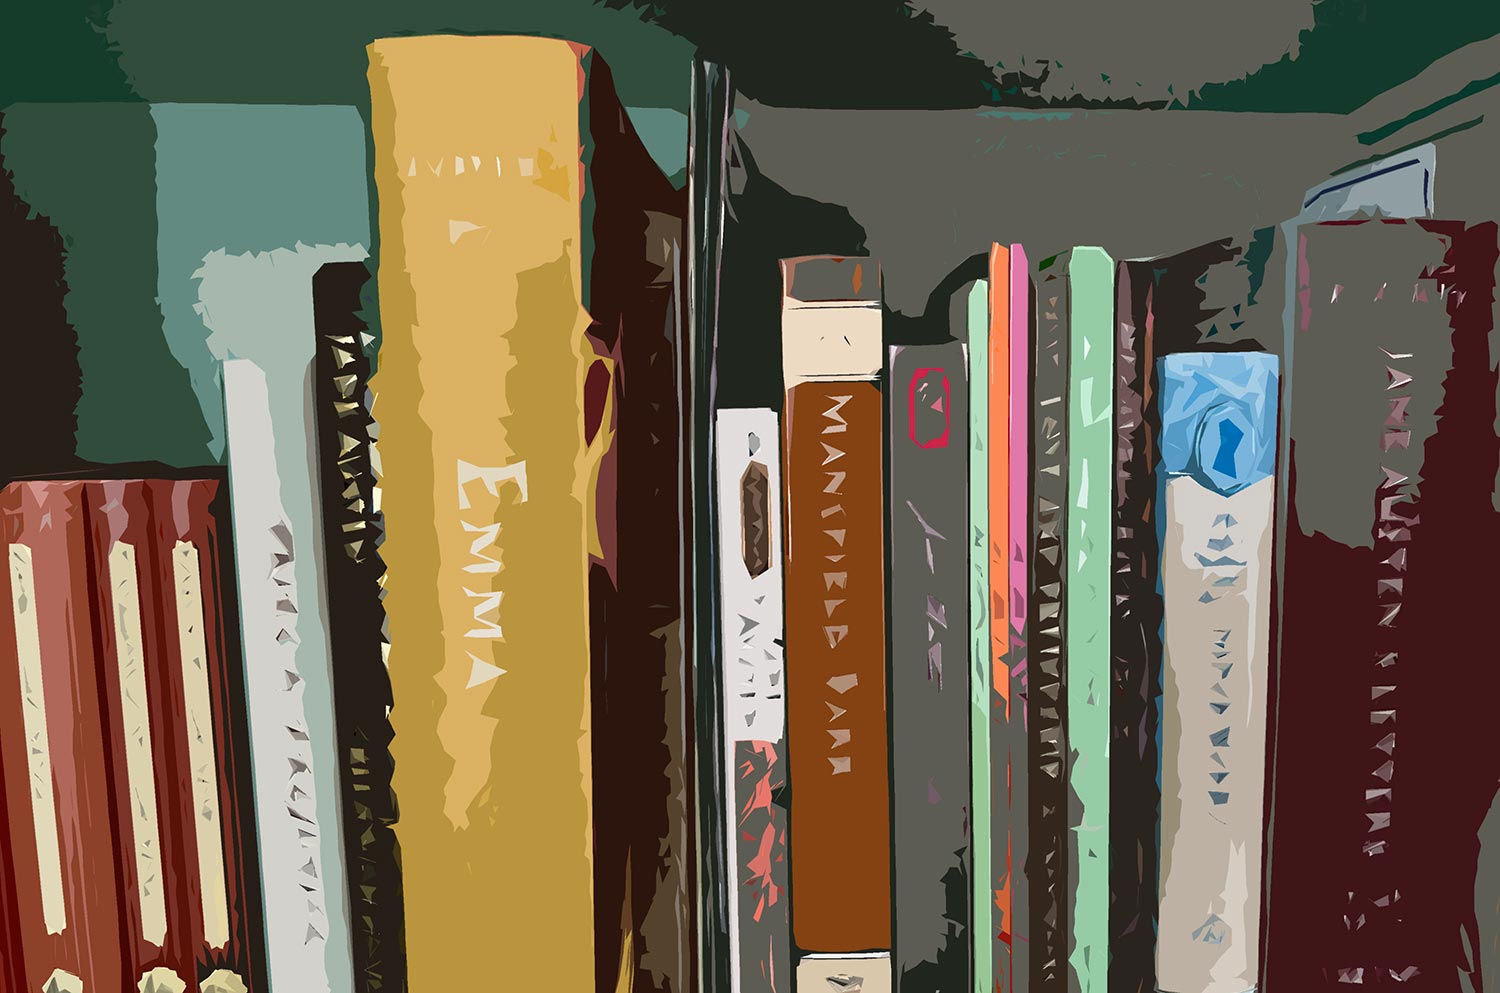 Jane Austen & A Reading Challenge: A Visit with the “Jane Austen July” Hosts